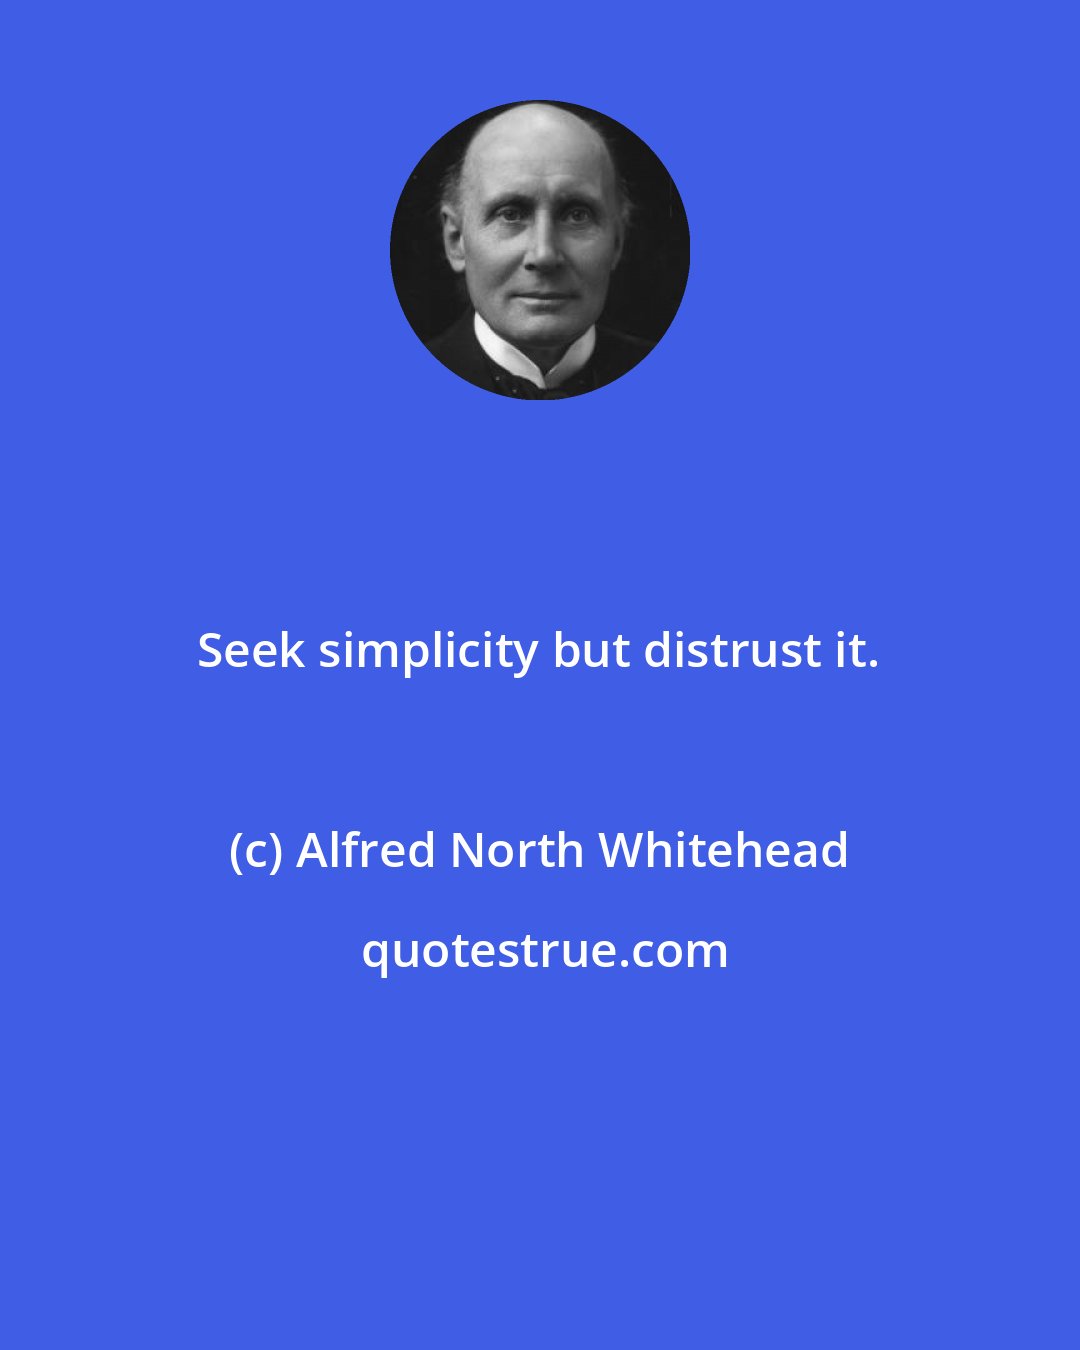 Alfred North Whitehead: Seek simplicity but distrust it.